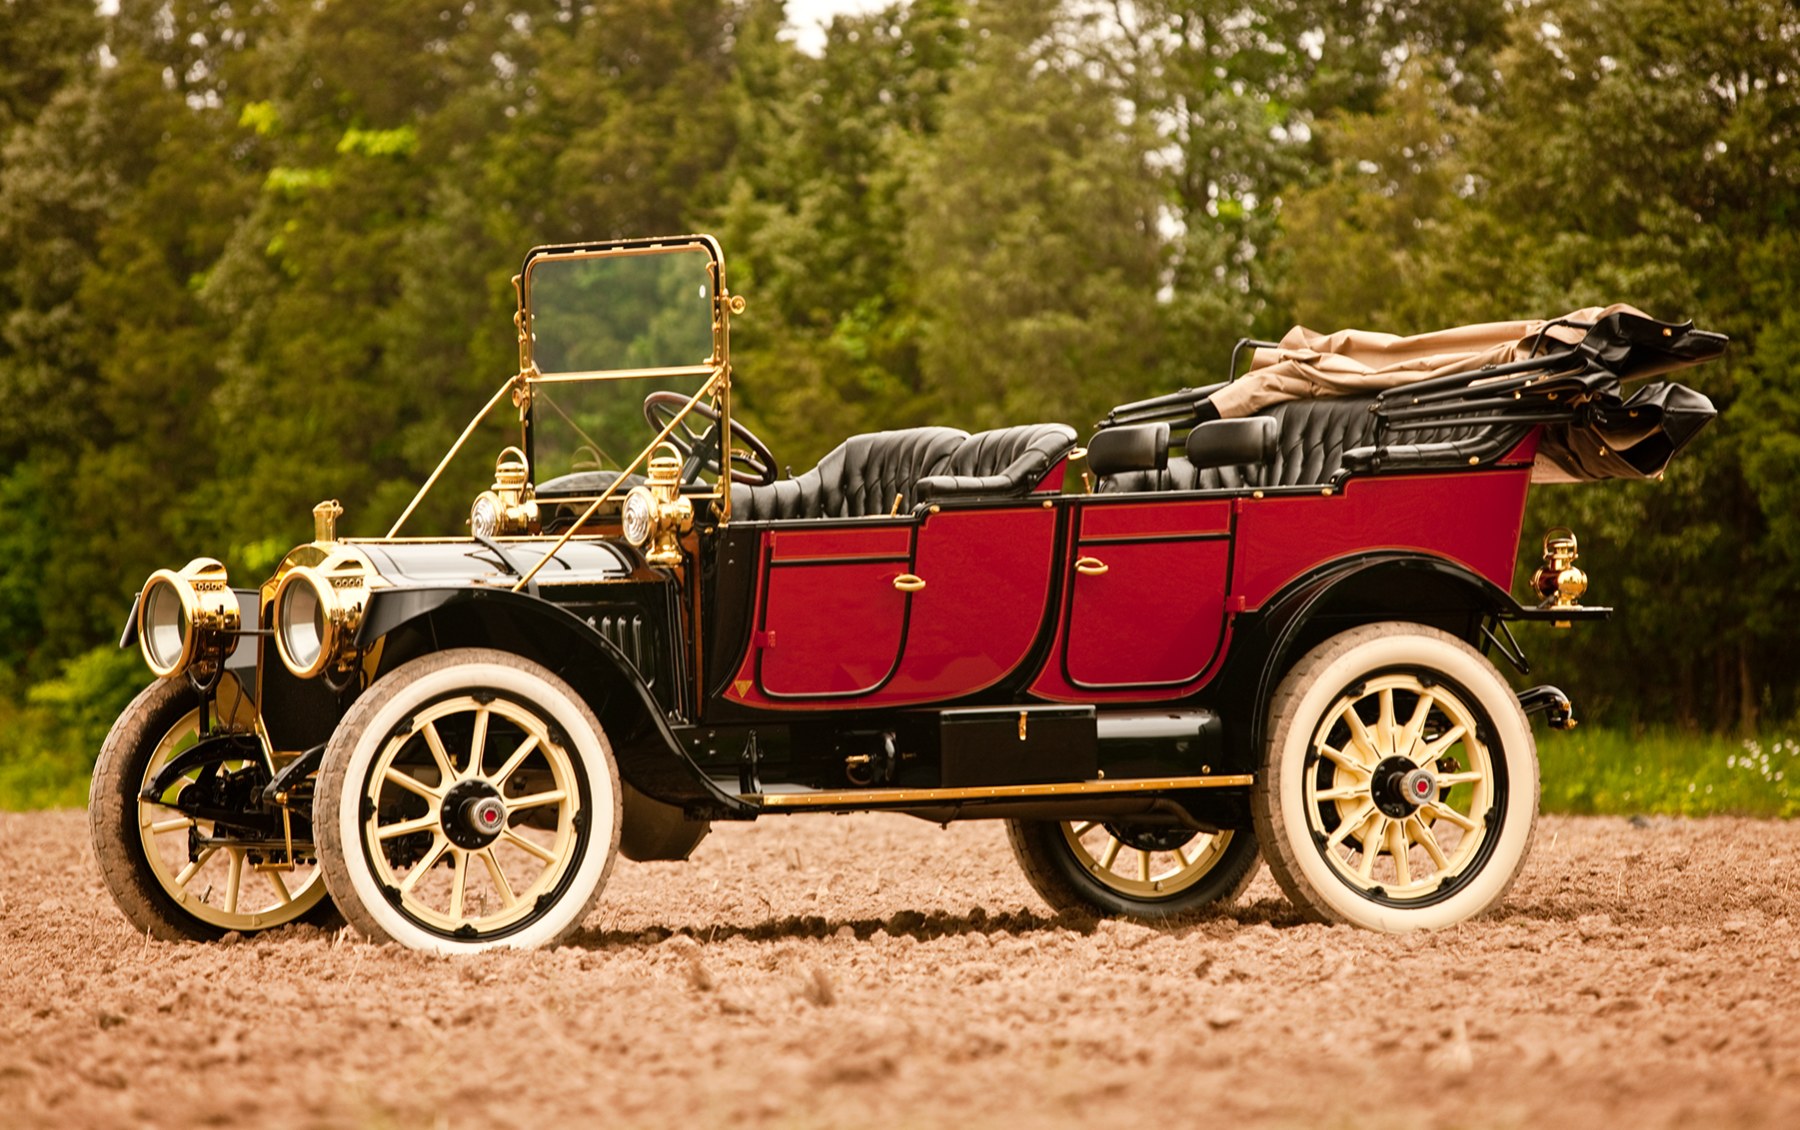 1912 Packard Model 30 Seven-Passenger Touring